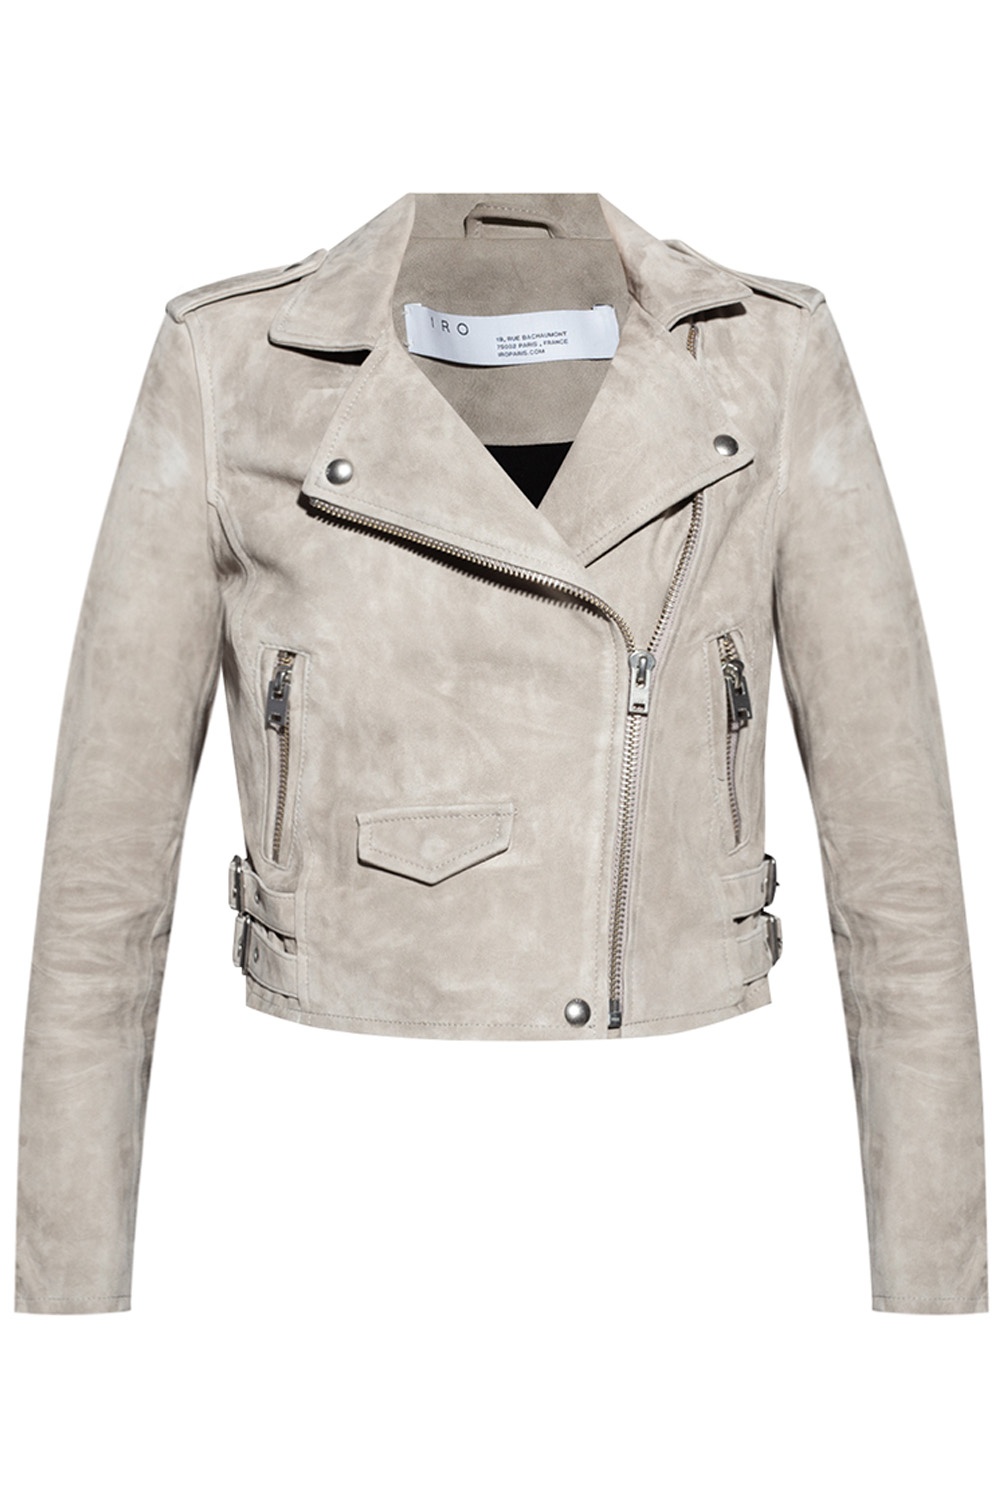 Iro Suede jacket | Women's Clothing | Vitkac